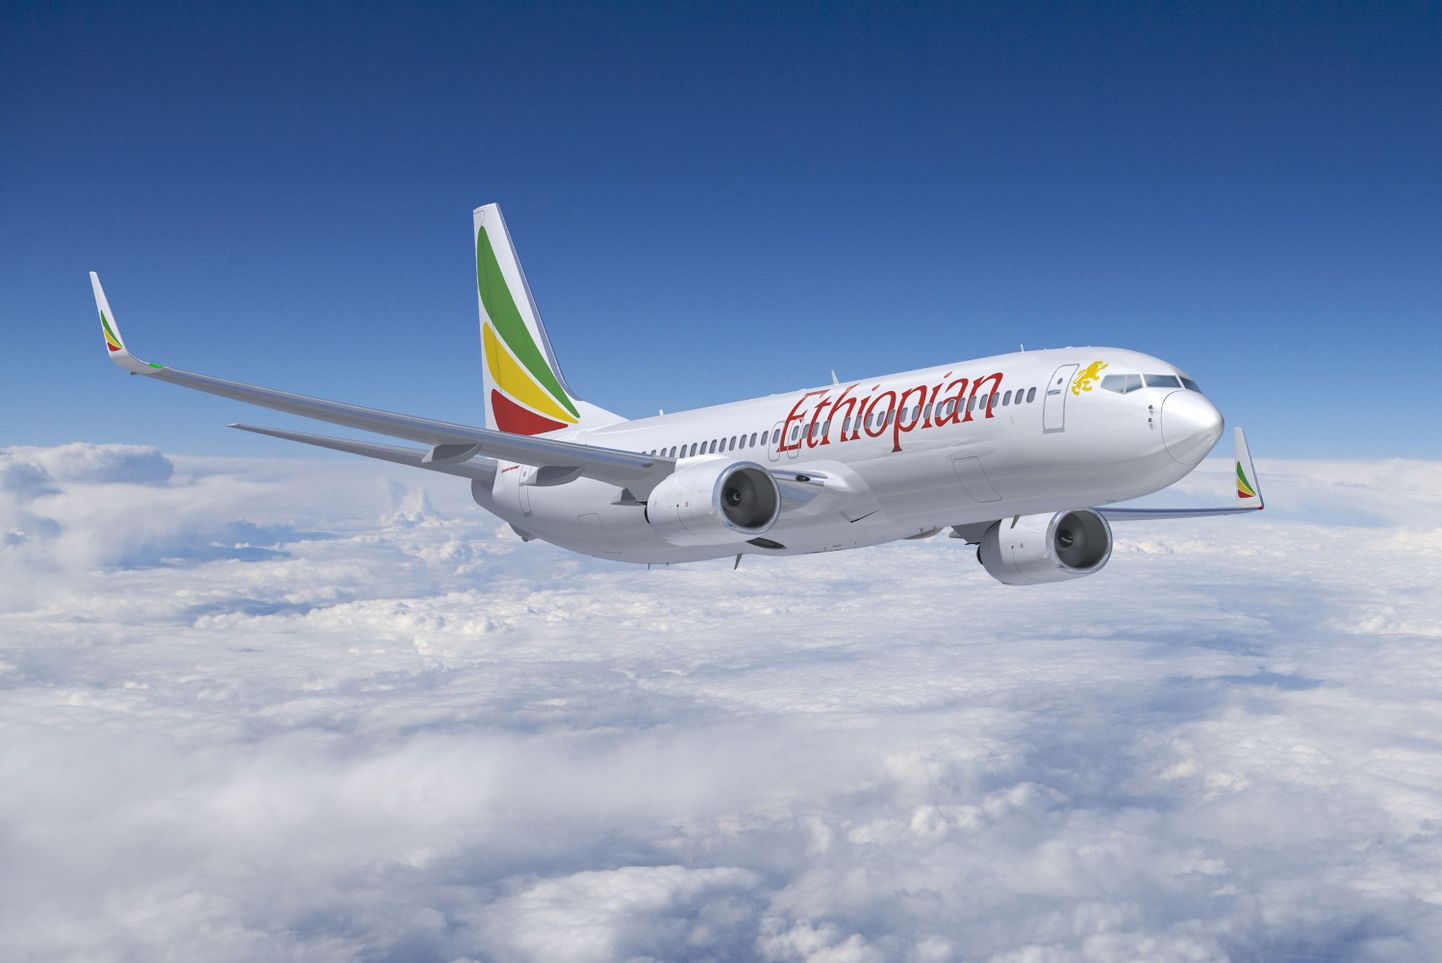 Ethiopian Airlinesi lennuk Boeing 737-800, mis Vahemerre kukkus